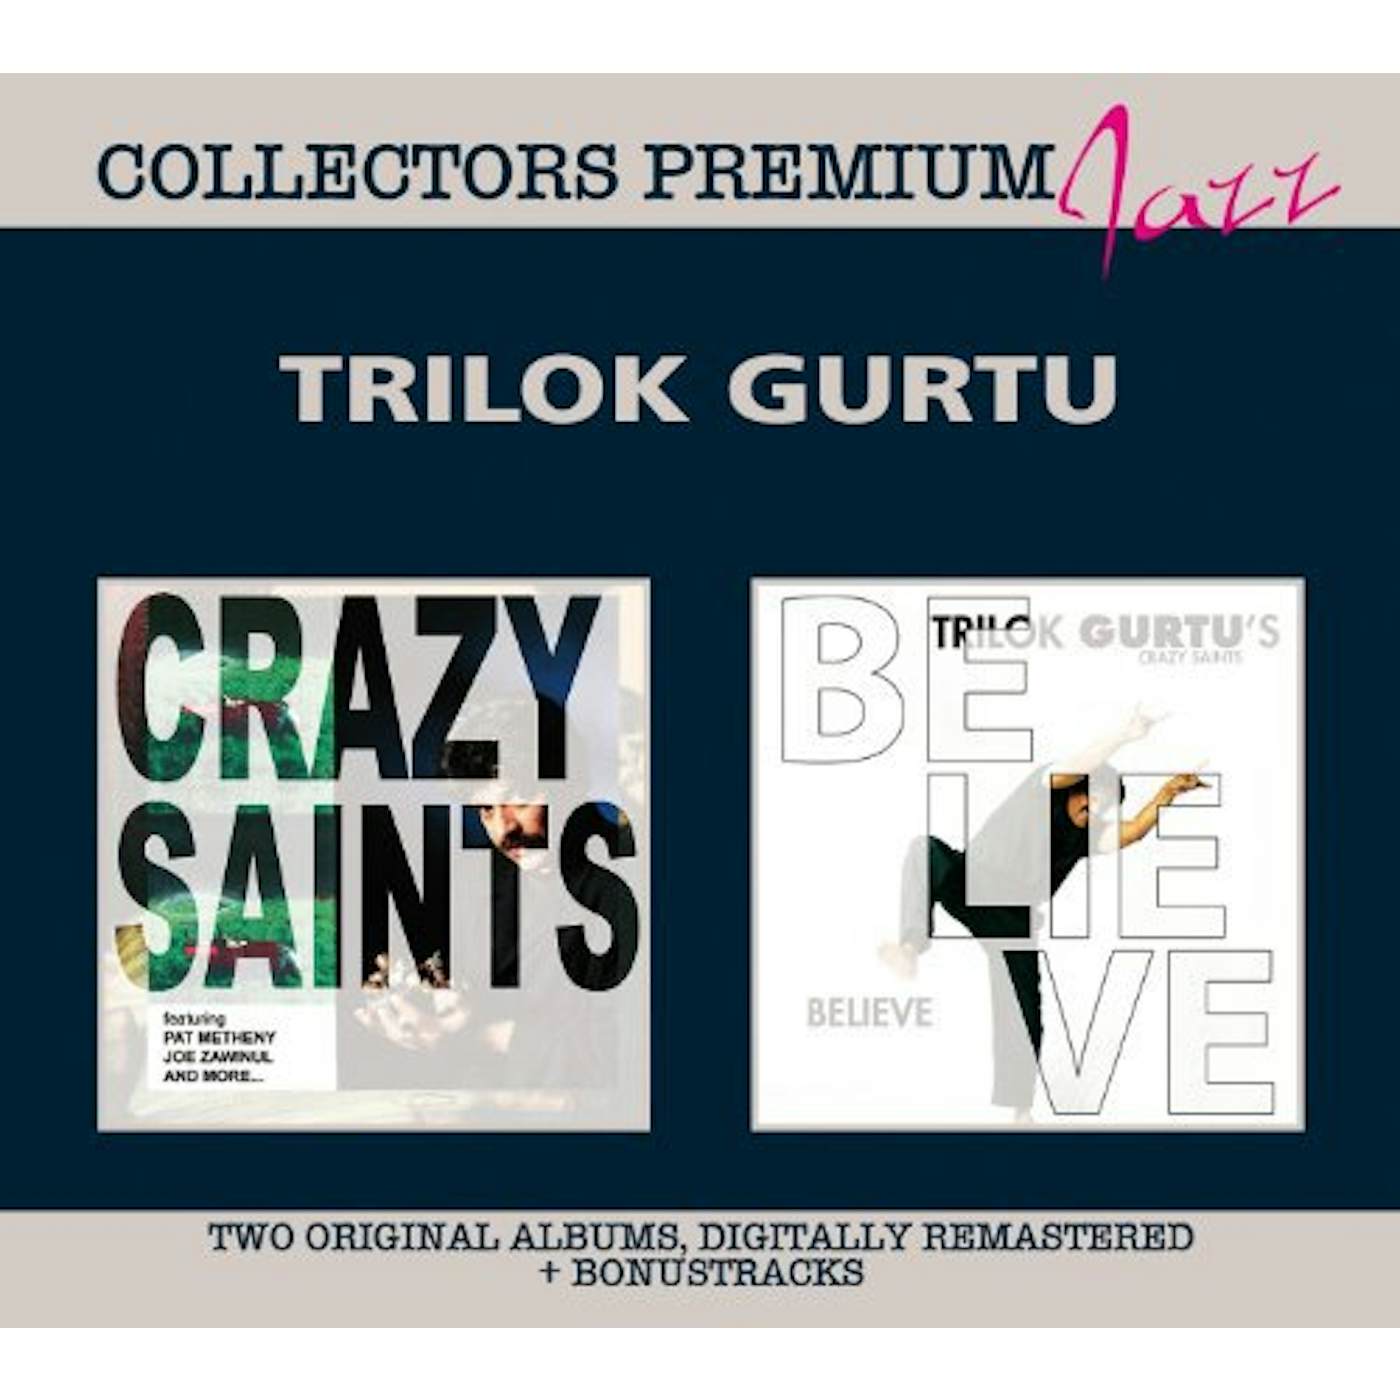 Trilok Gurtu CRAZY SAINTS & BELIEVE CD